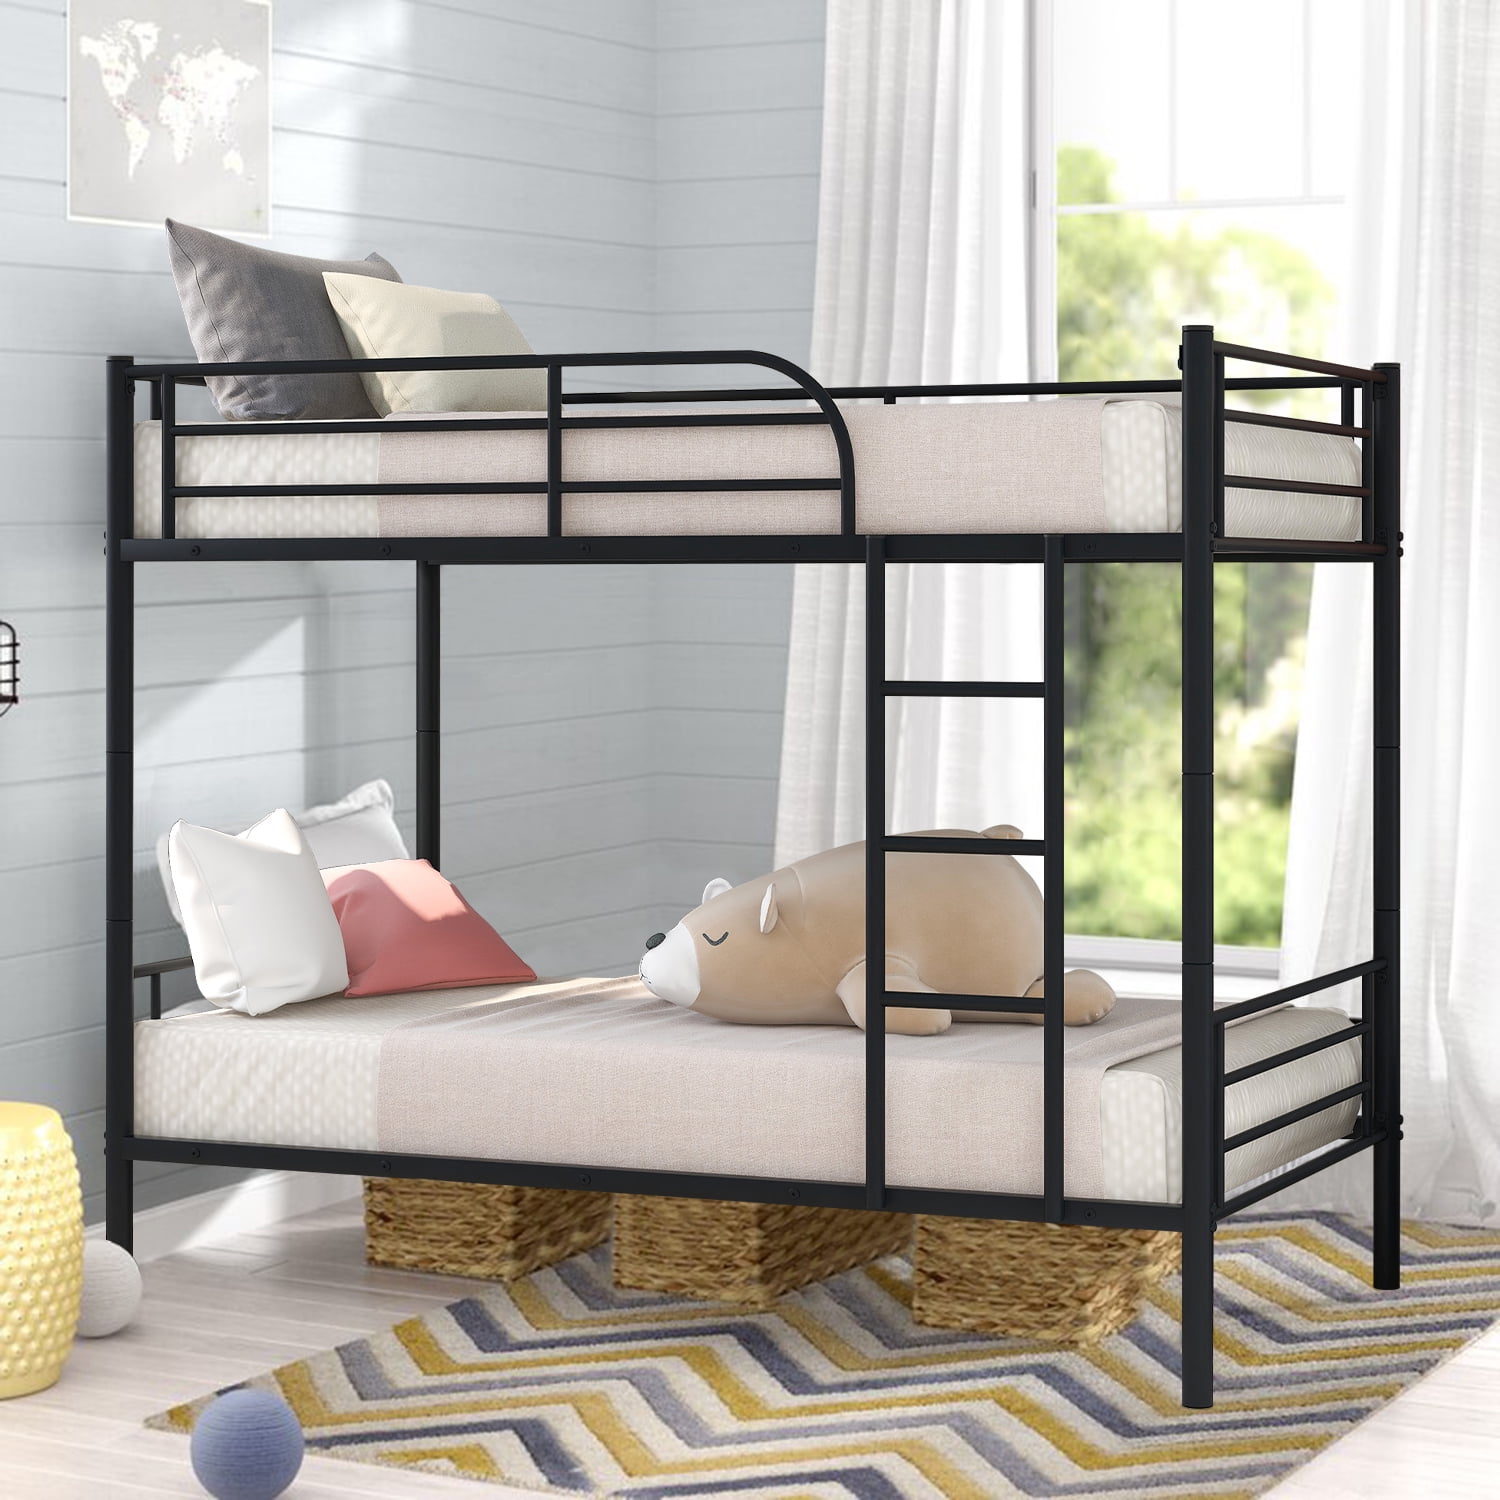 Uhomerpo Metal Twin Bunk Beds Modern, Bunk Beds Under $100